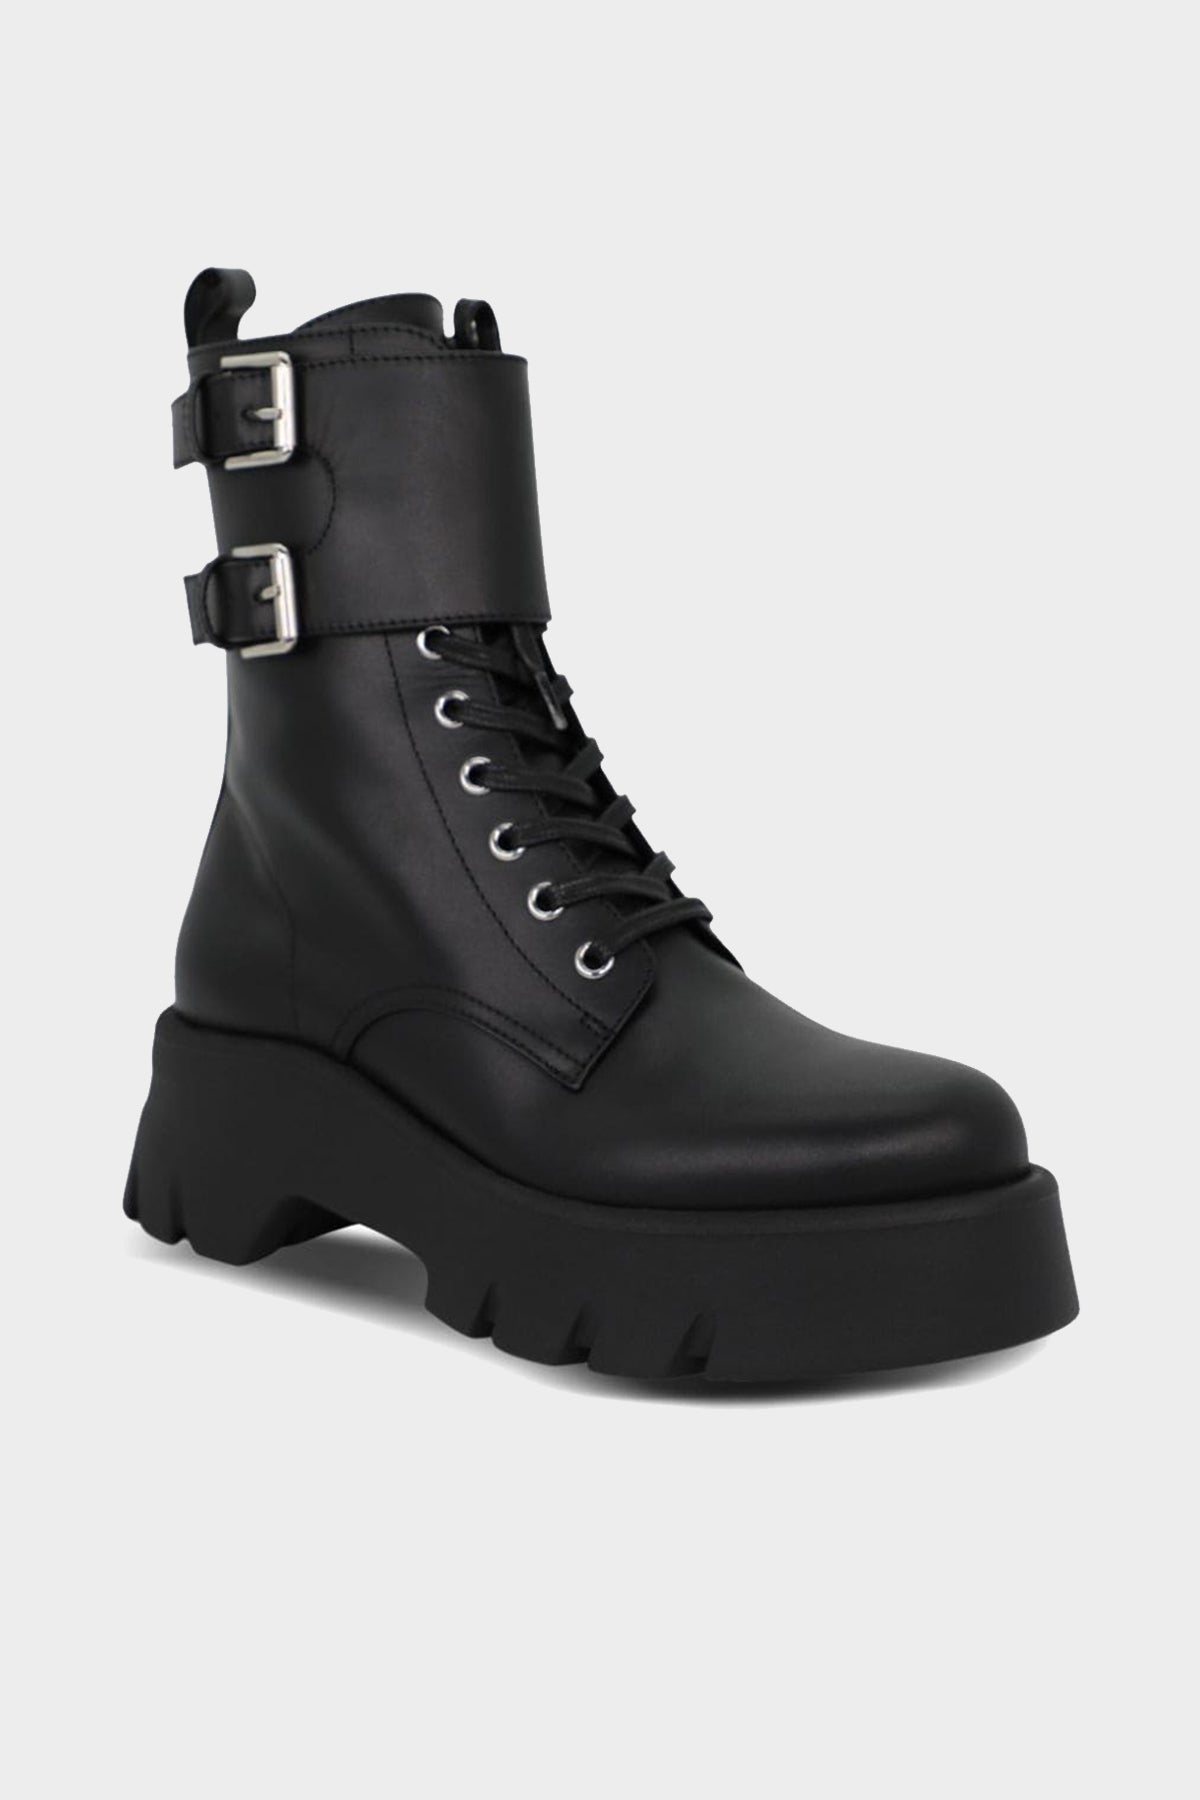 Marloe Leather Combat Boots in Black - shop-olivia.com